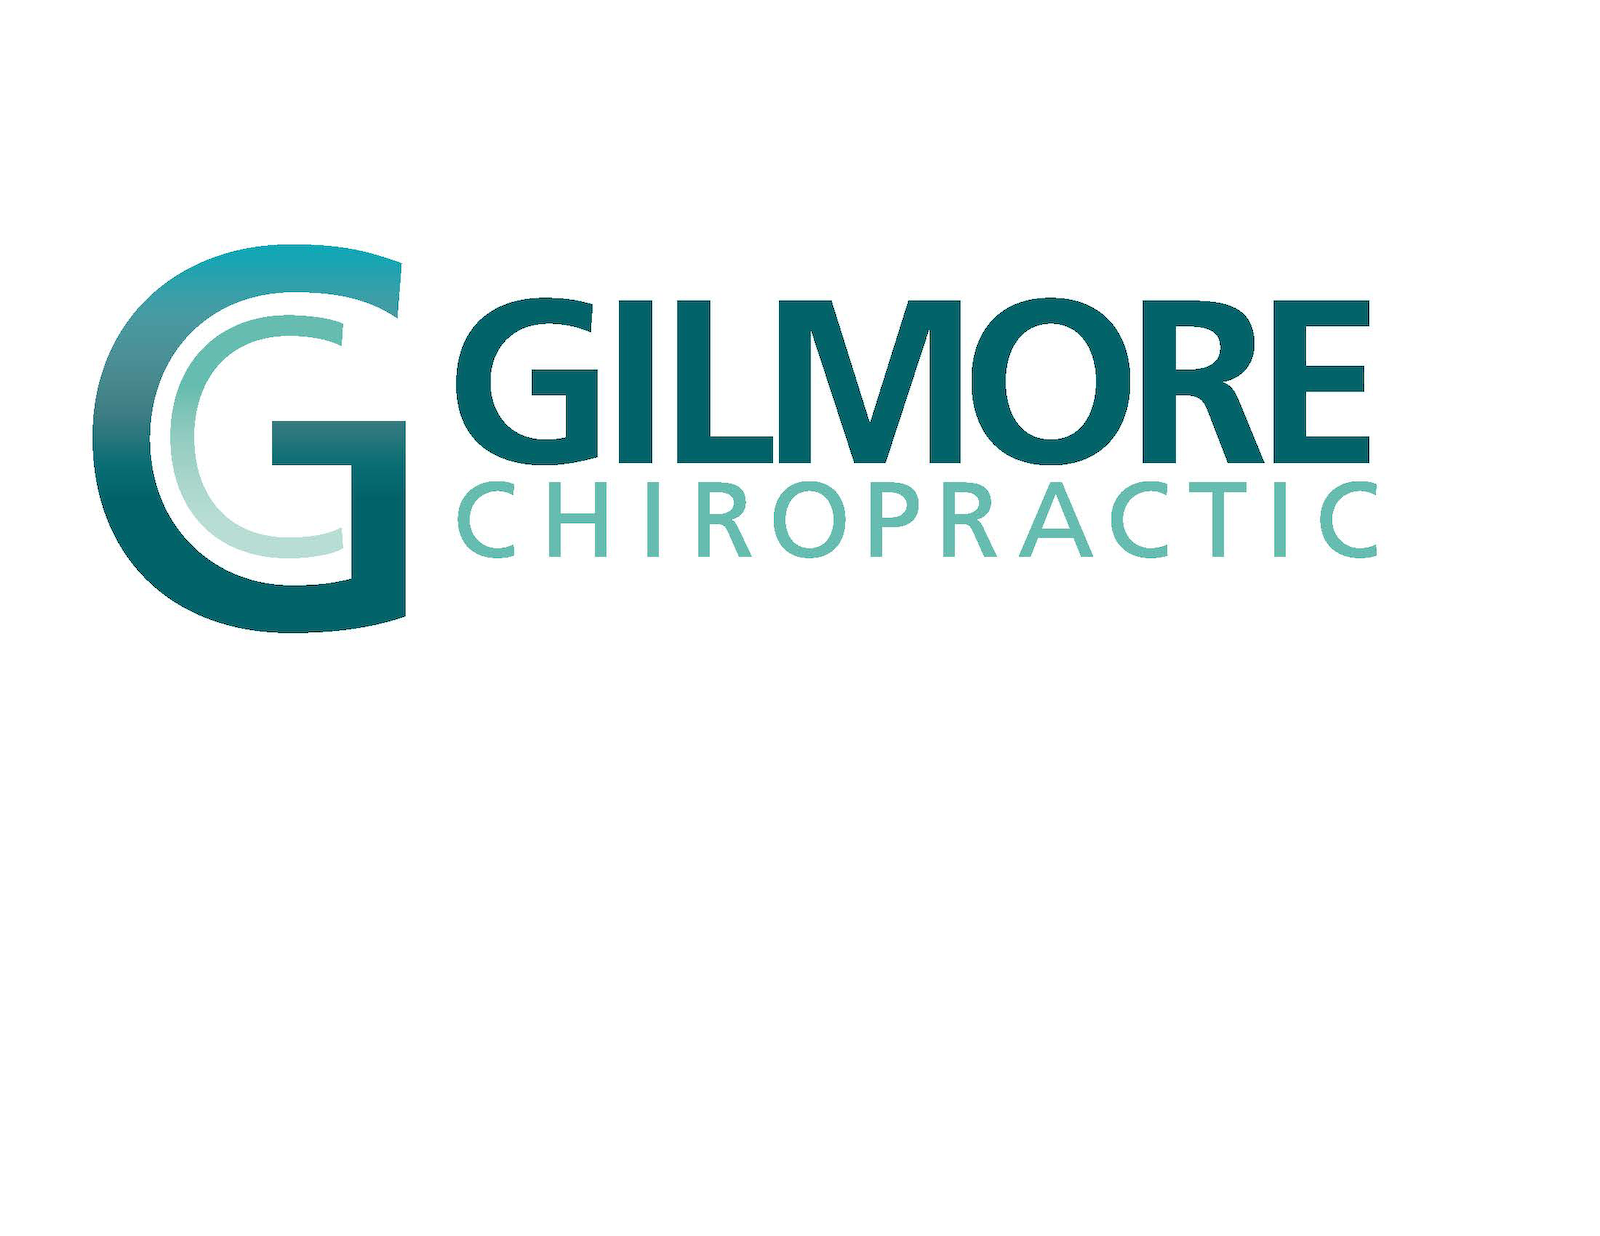 Gilmore Chiropractic